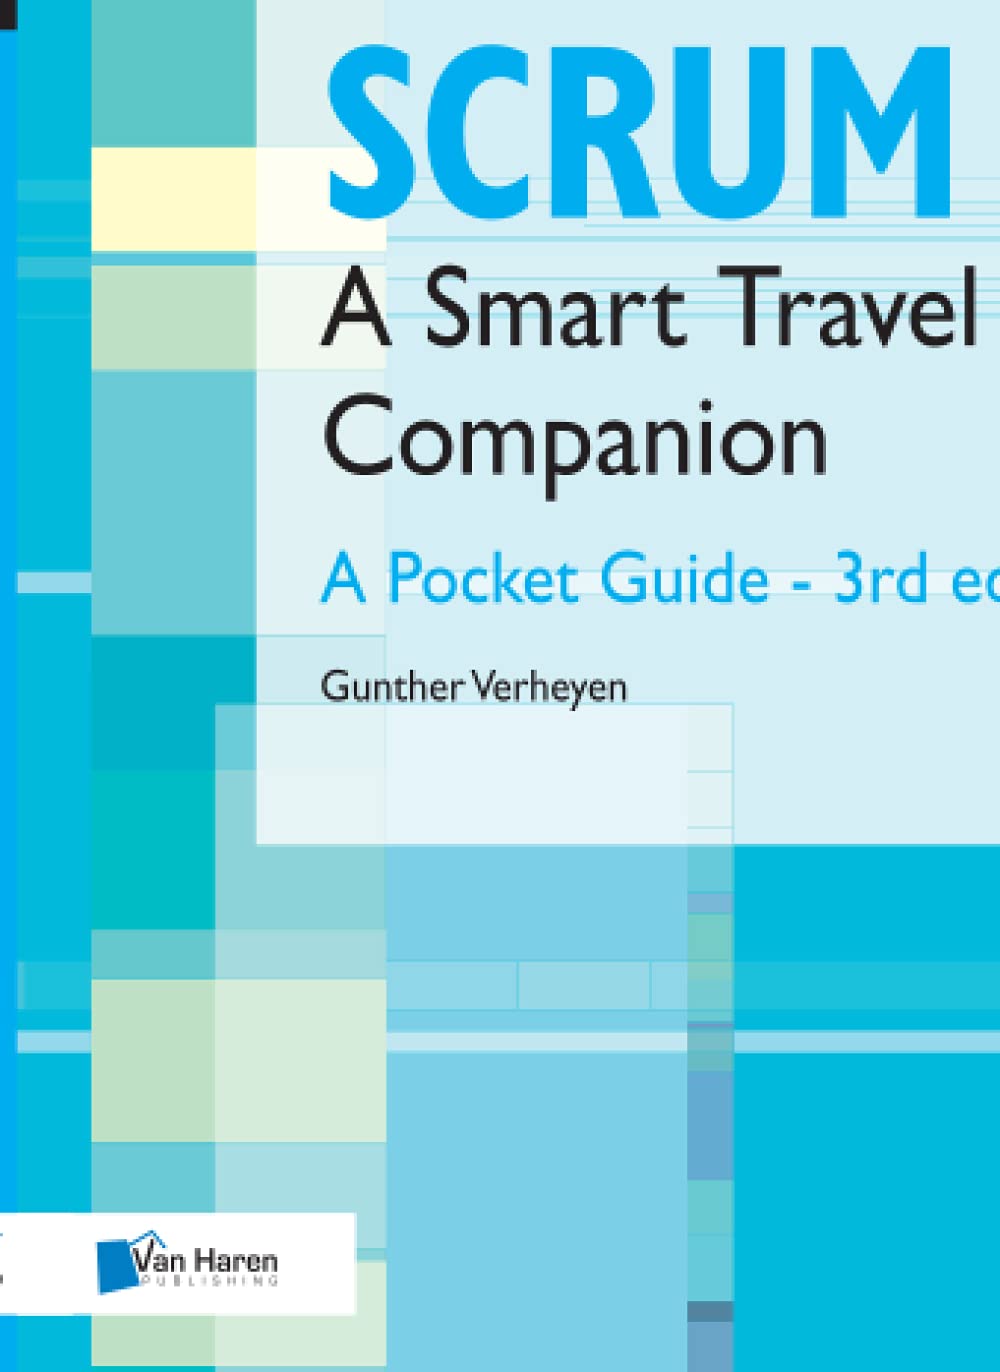 Book Scrum - A Pocket Guide - 3rd edition Gunther Verheyen